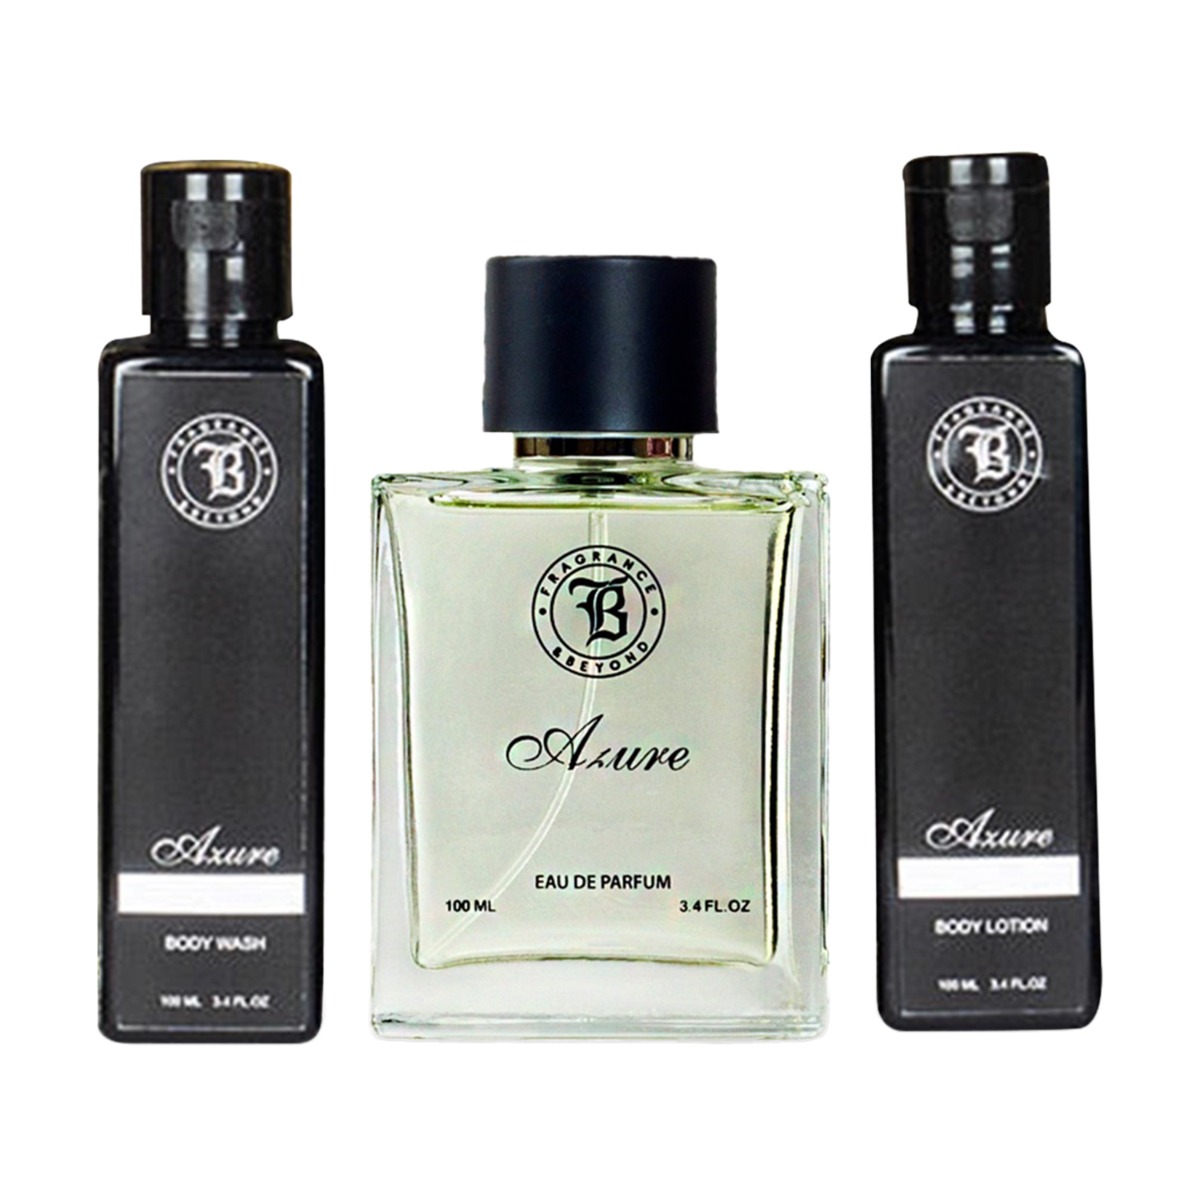 Fragrance & Beyond Perfume - Azure 3 piece Gift Set for Men, Eau De Parfum 80ml + Paraben Free Body wash 100ml + SLS Free Body Lotion 100ml